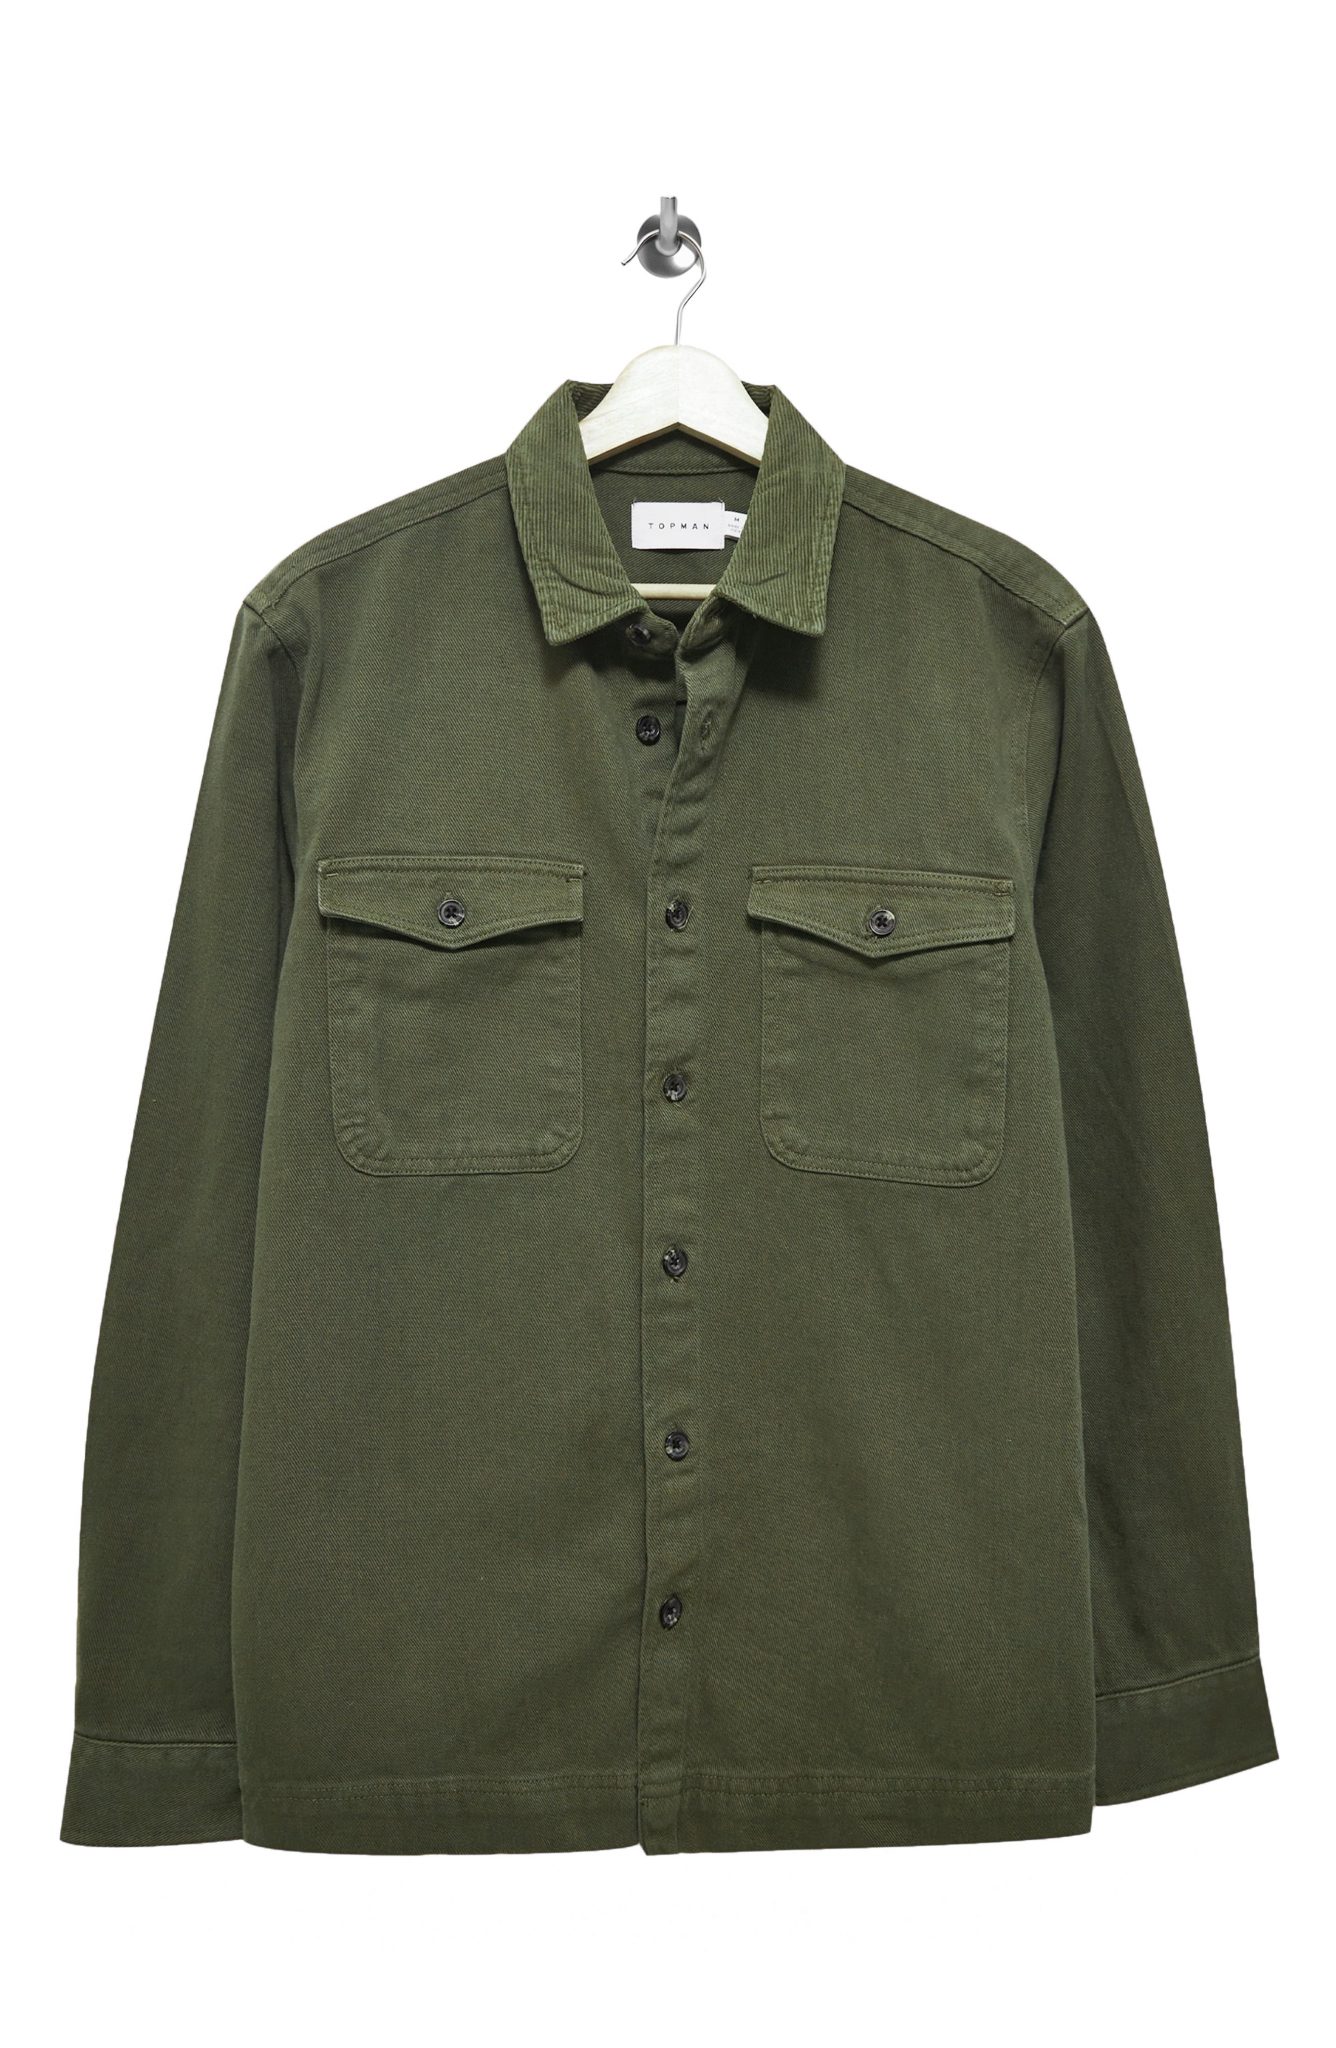 Men’s Topman Corduroy Collar Overshirt, Size Small - Green | The ...